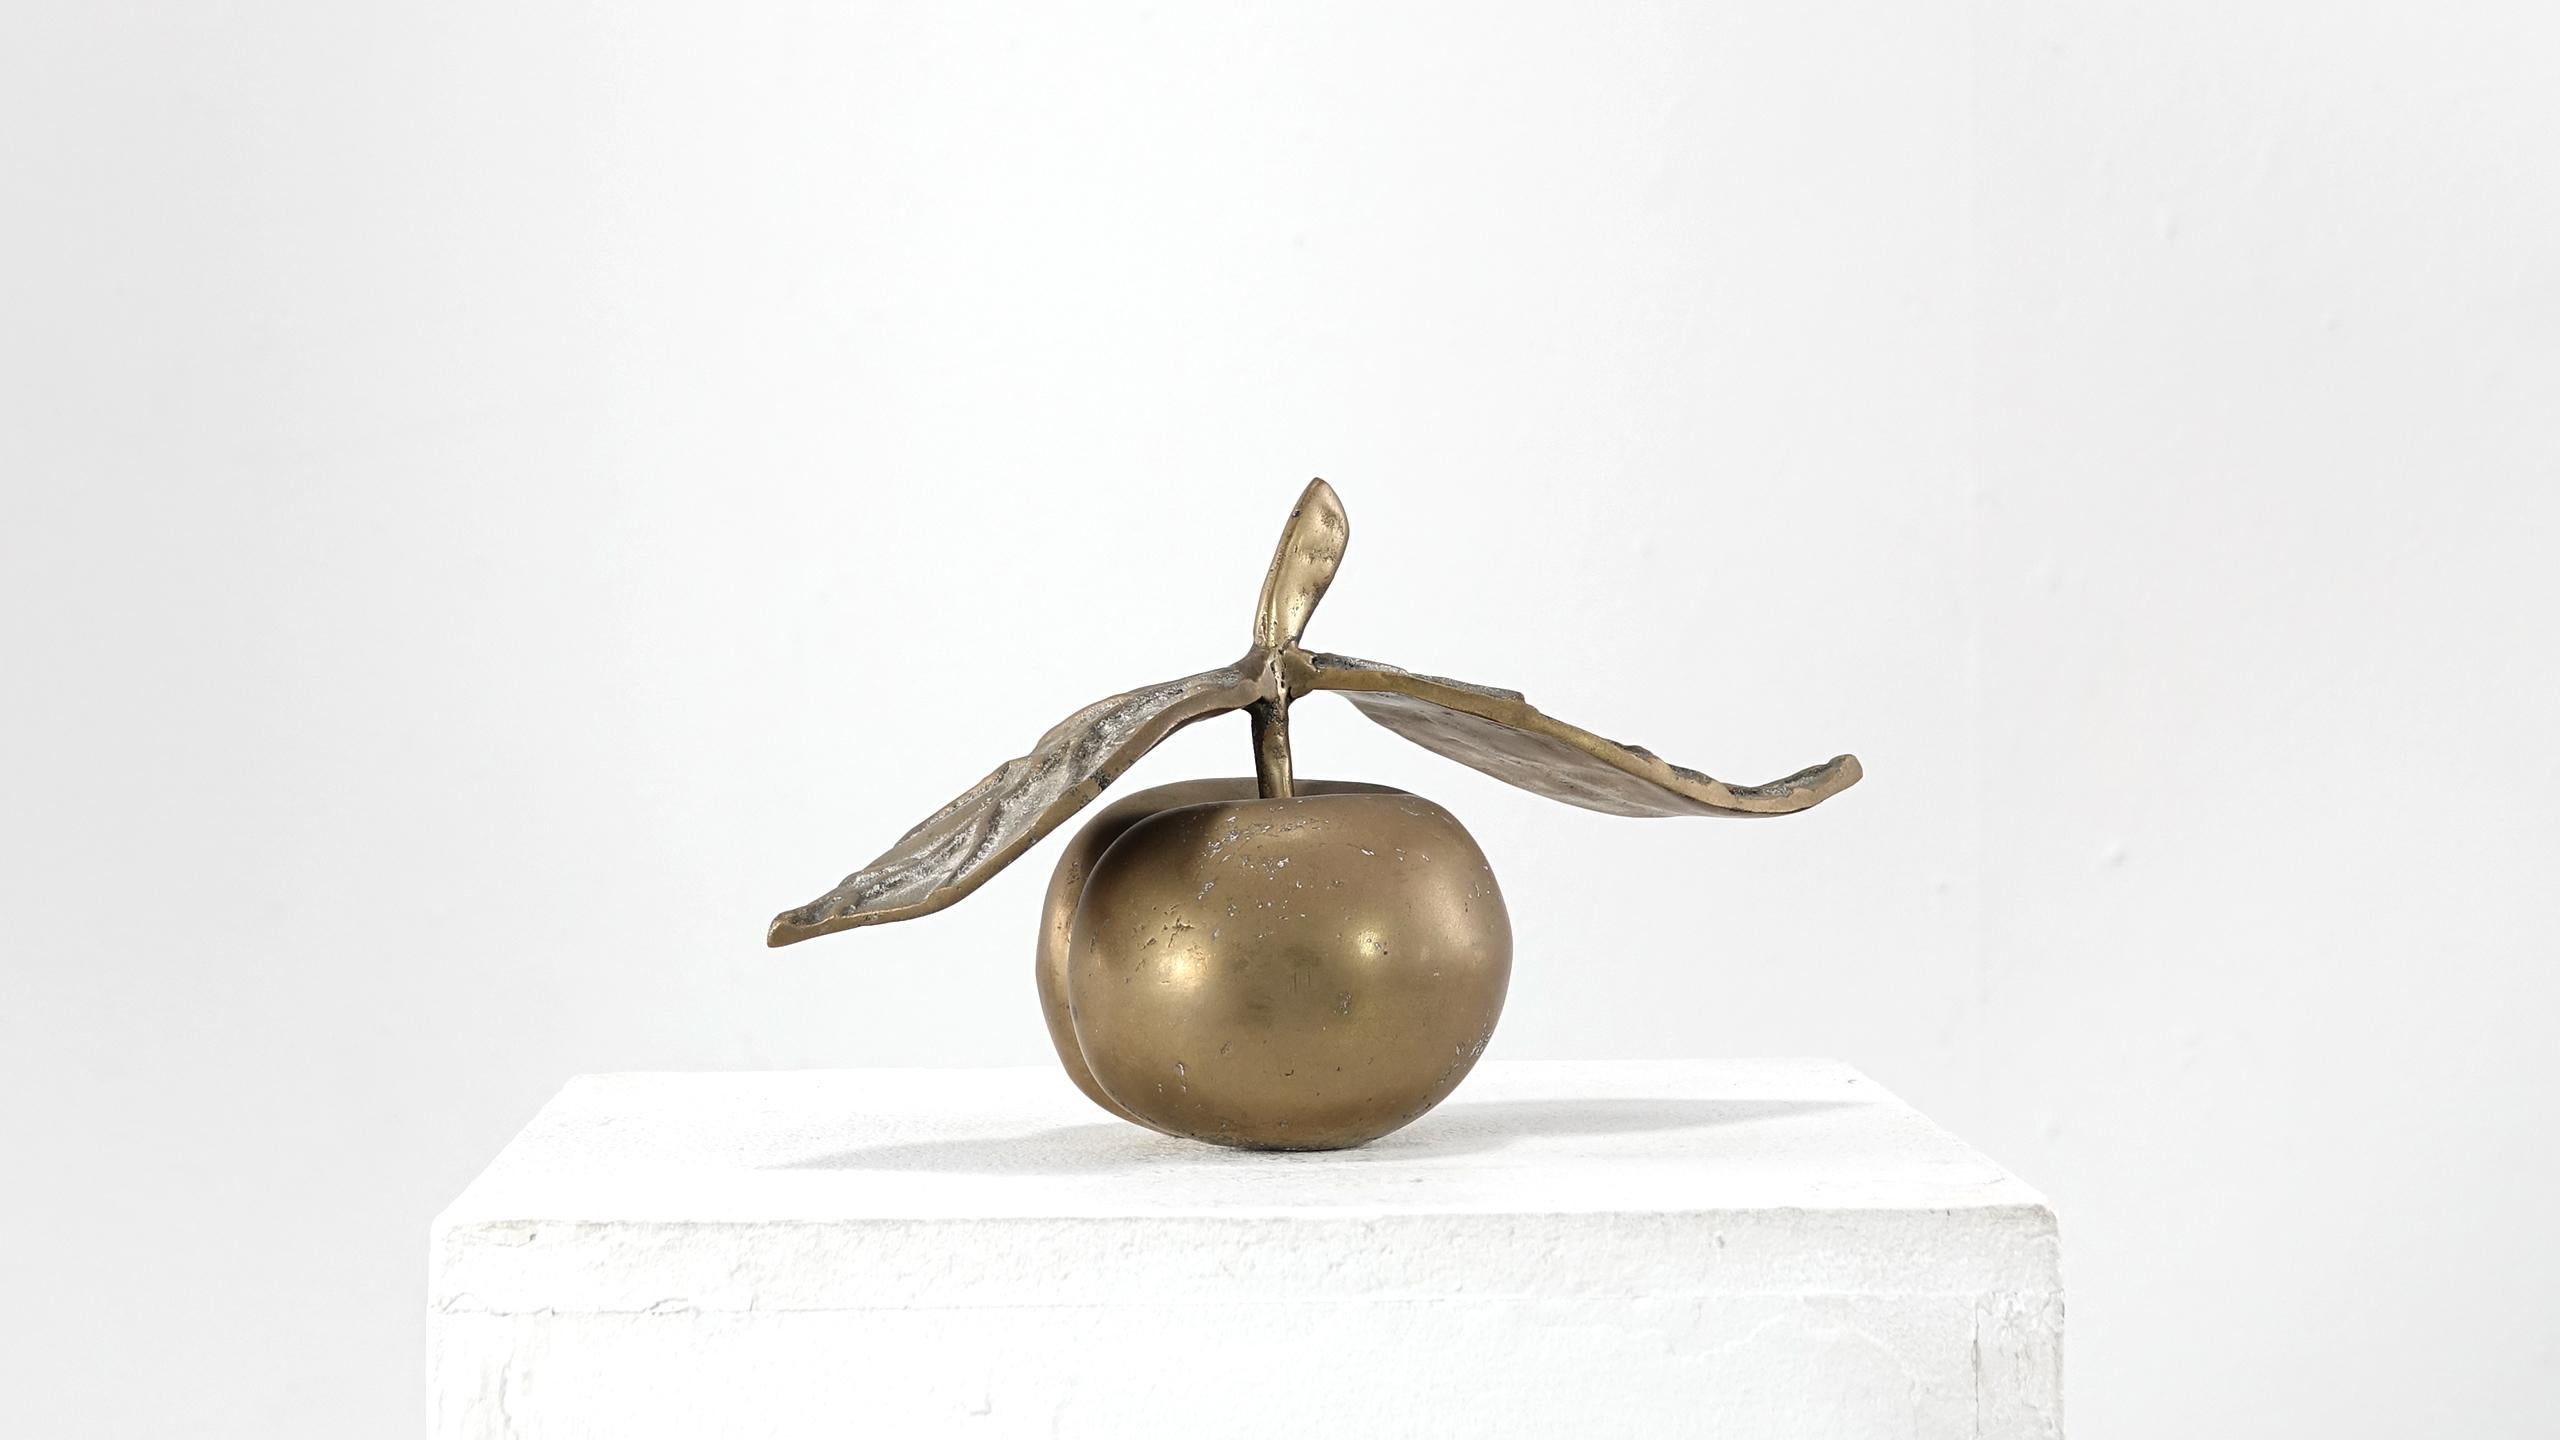 David Marshall Desenos Brass Apple Sculpture 4